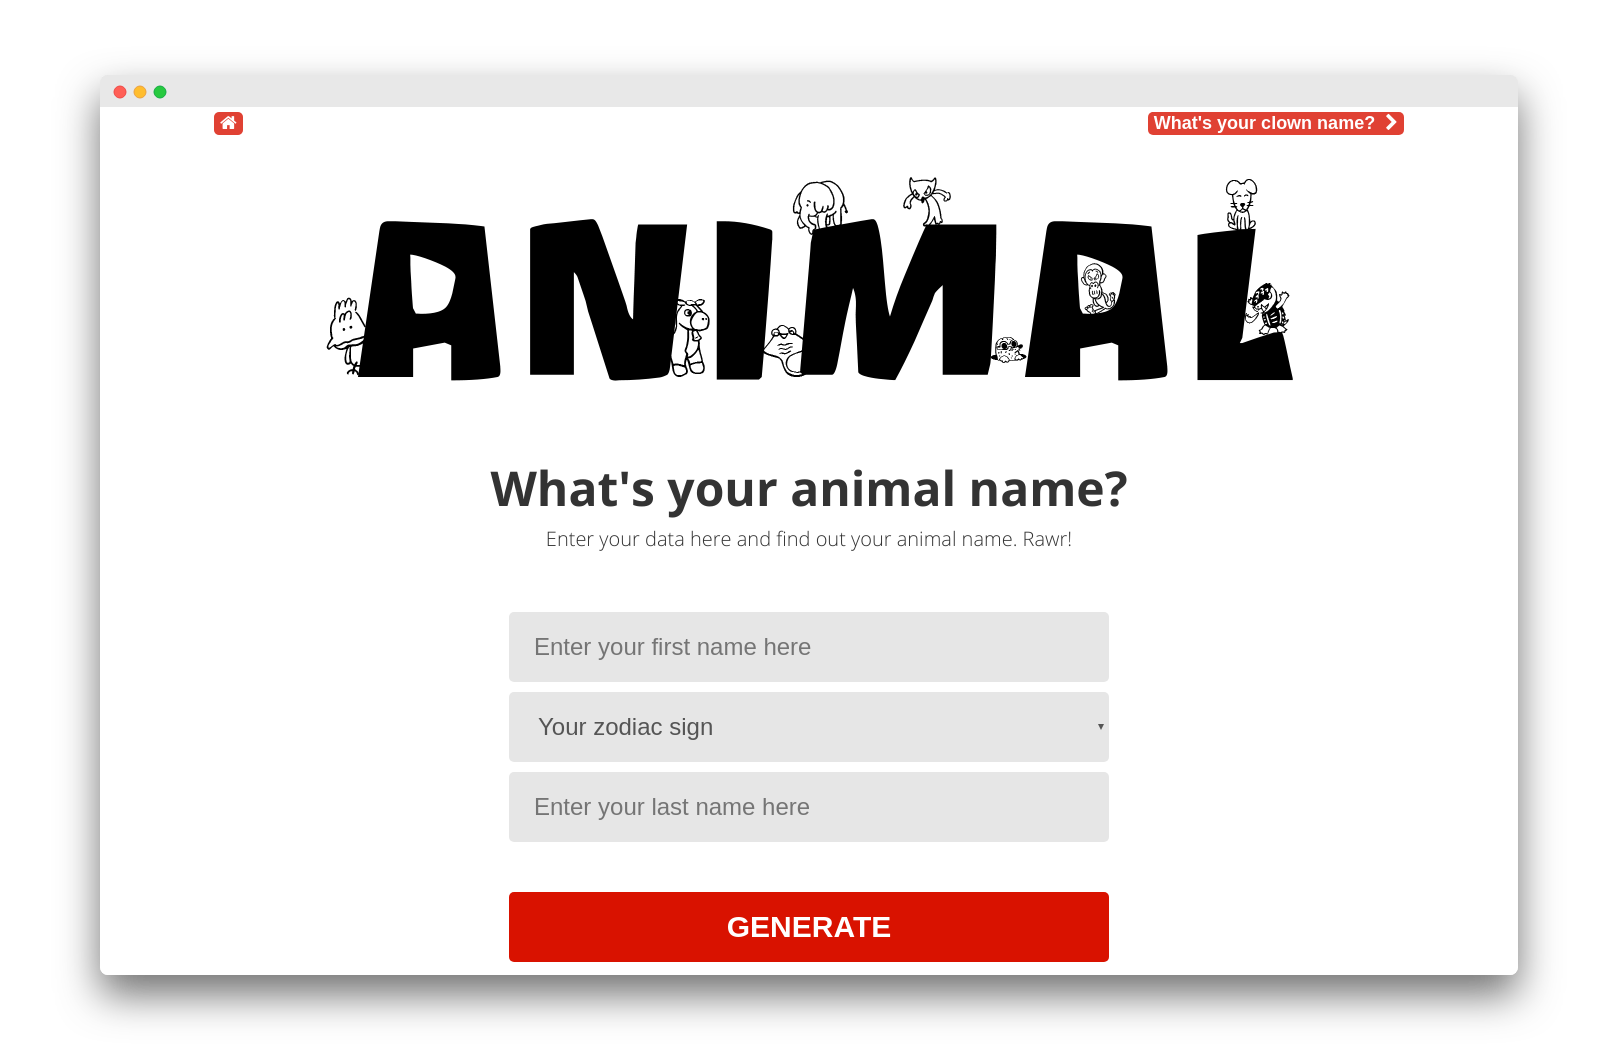 FunTools - animal name generator